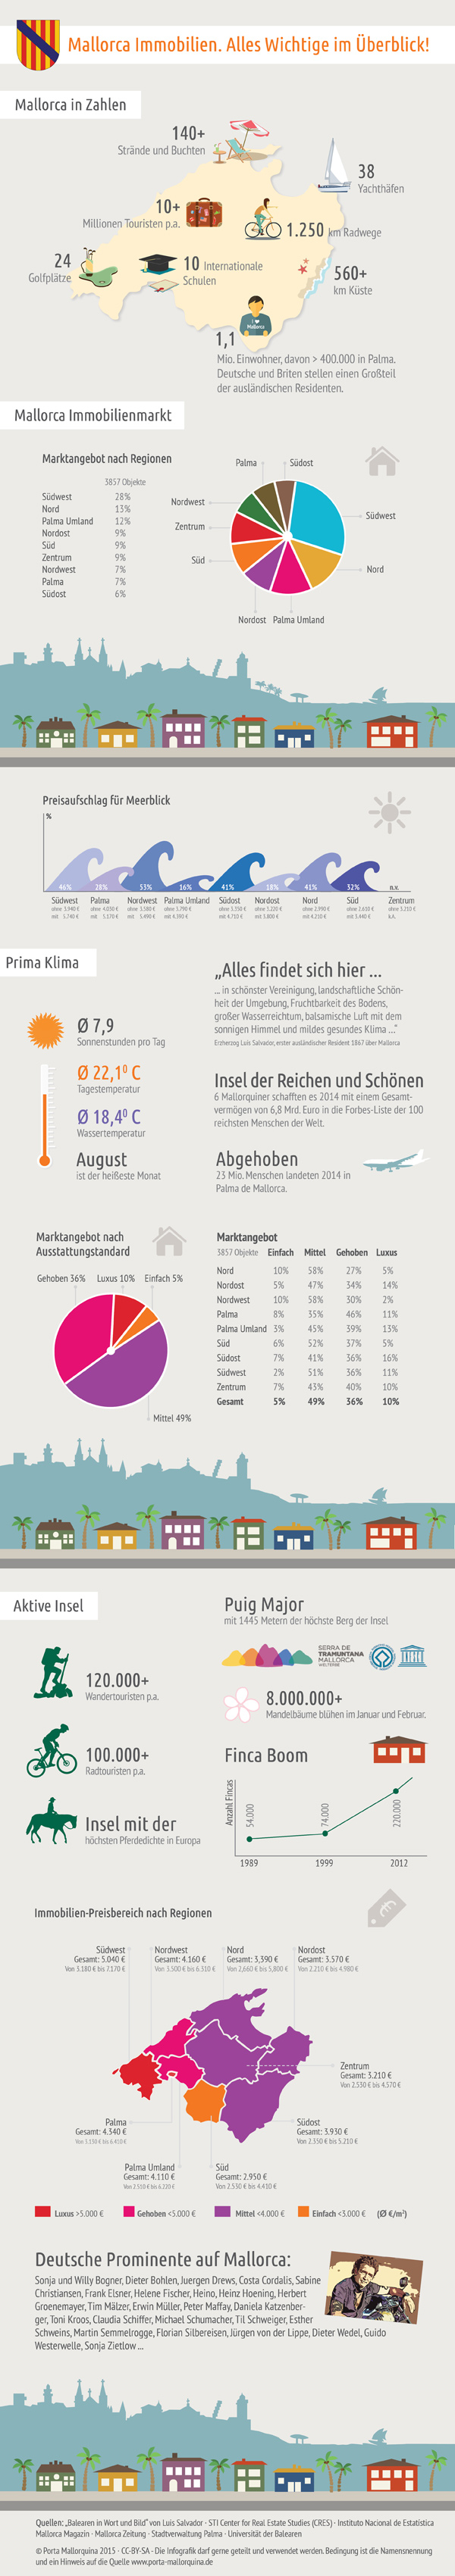 mallorca-immobilien-infografik